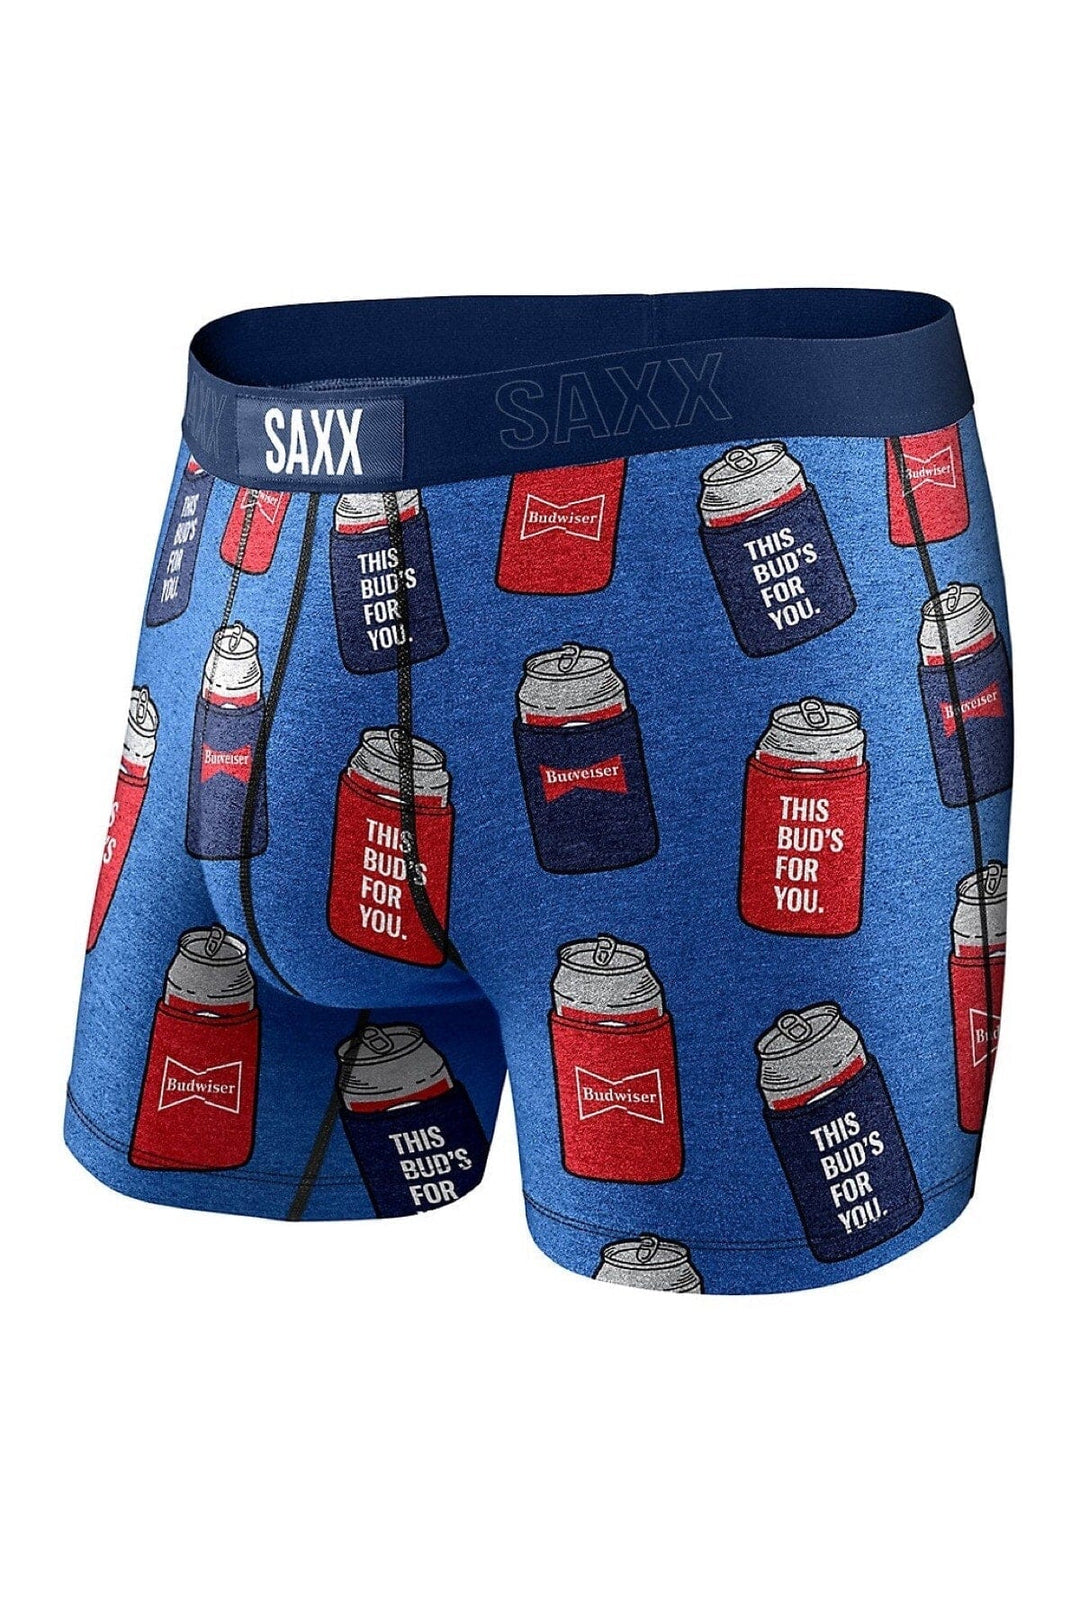 Budweiser Homme - Accessoires - Boxer SAXX